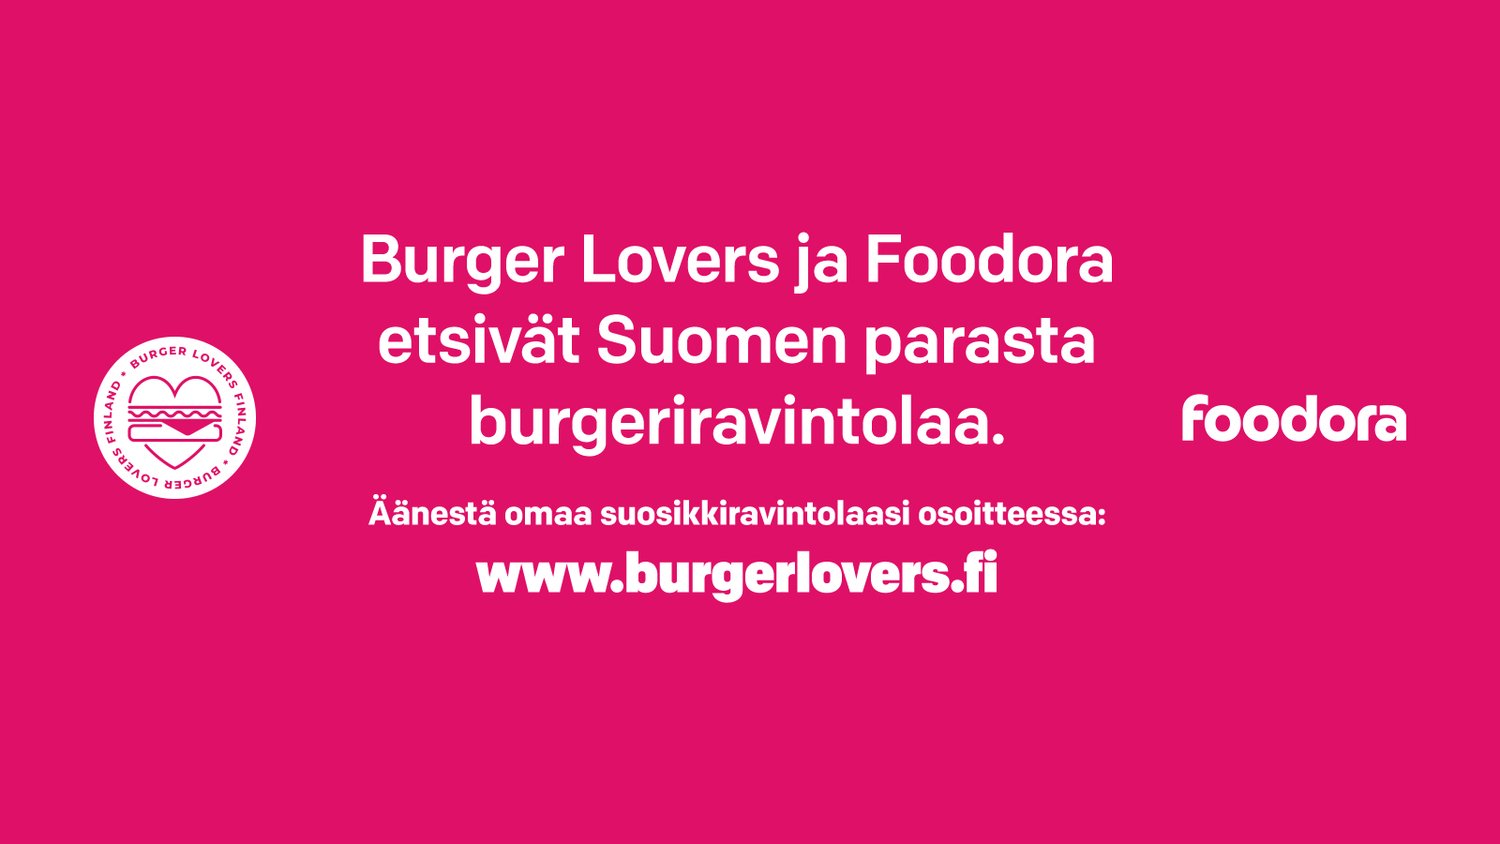 www.burgerlovers.fi